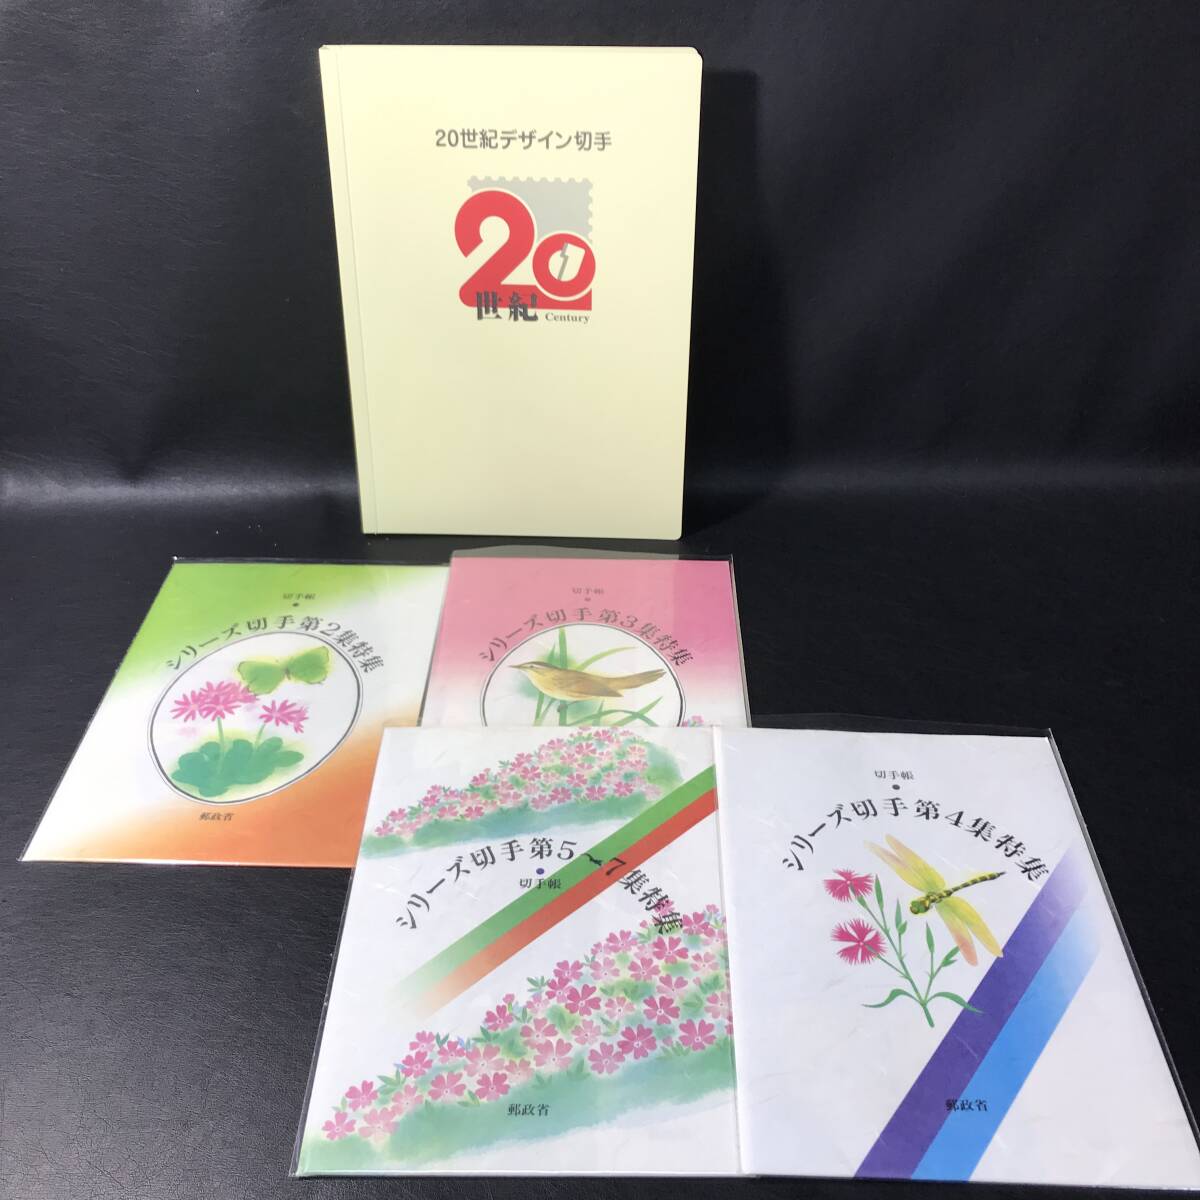 TG12 20世紀デザイン切手 と シリーズ切手 第2～7集特集 4冊 まとめて 額面16000円分程_画像1